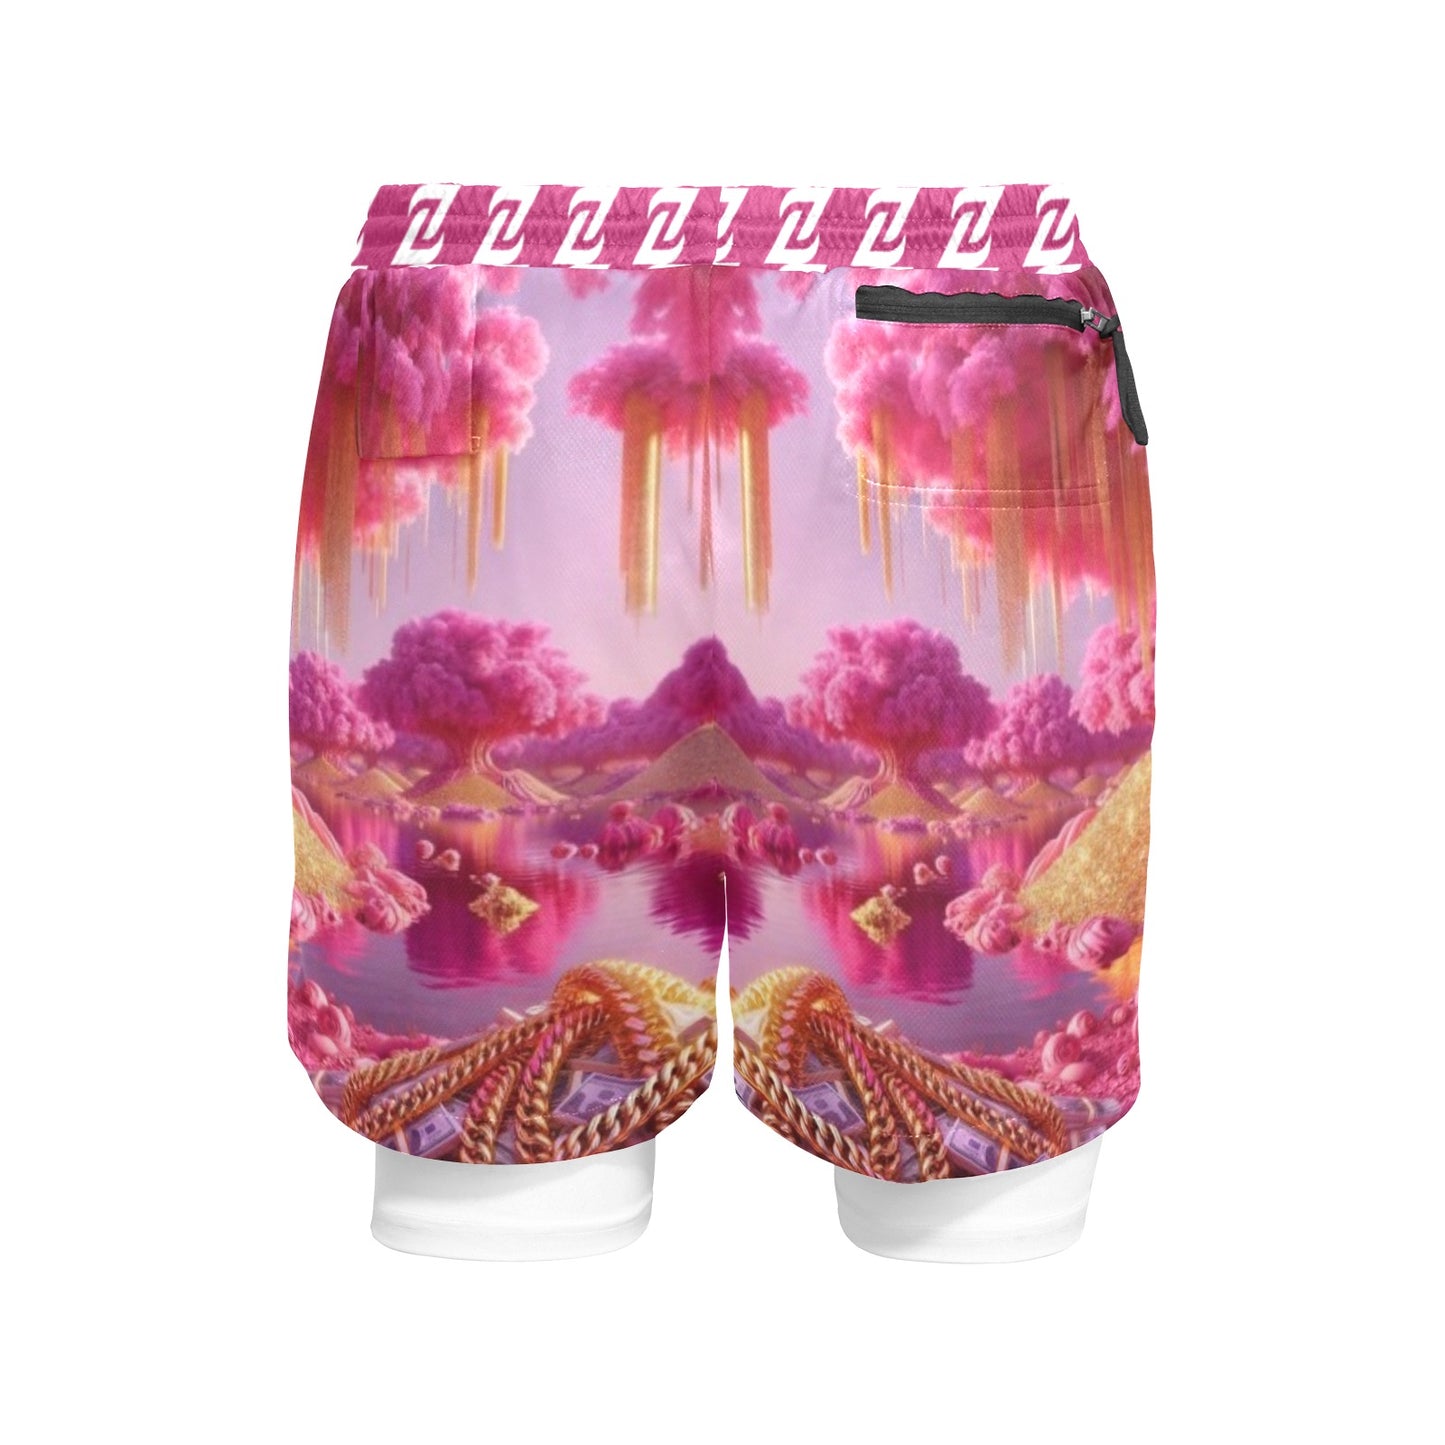 Zen Shorts with Liner - Pink Money